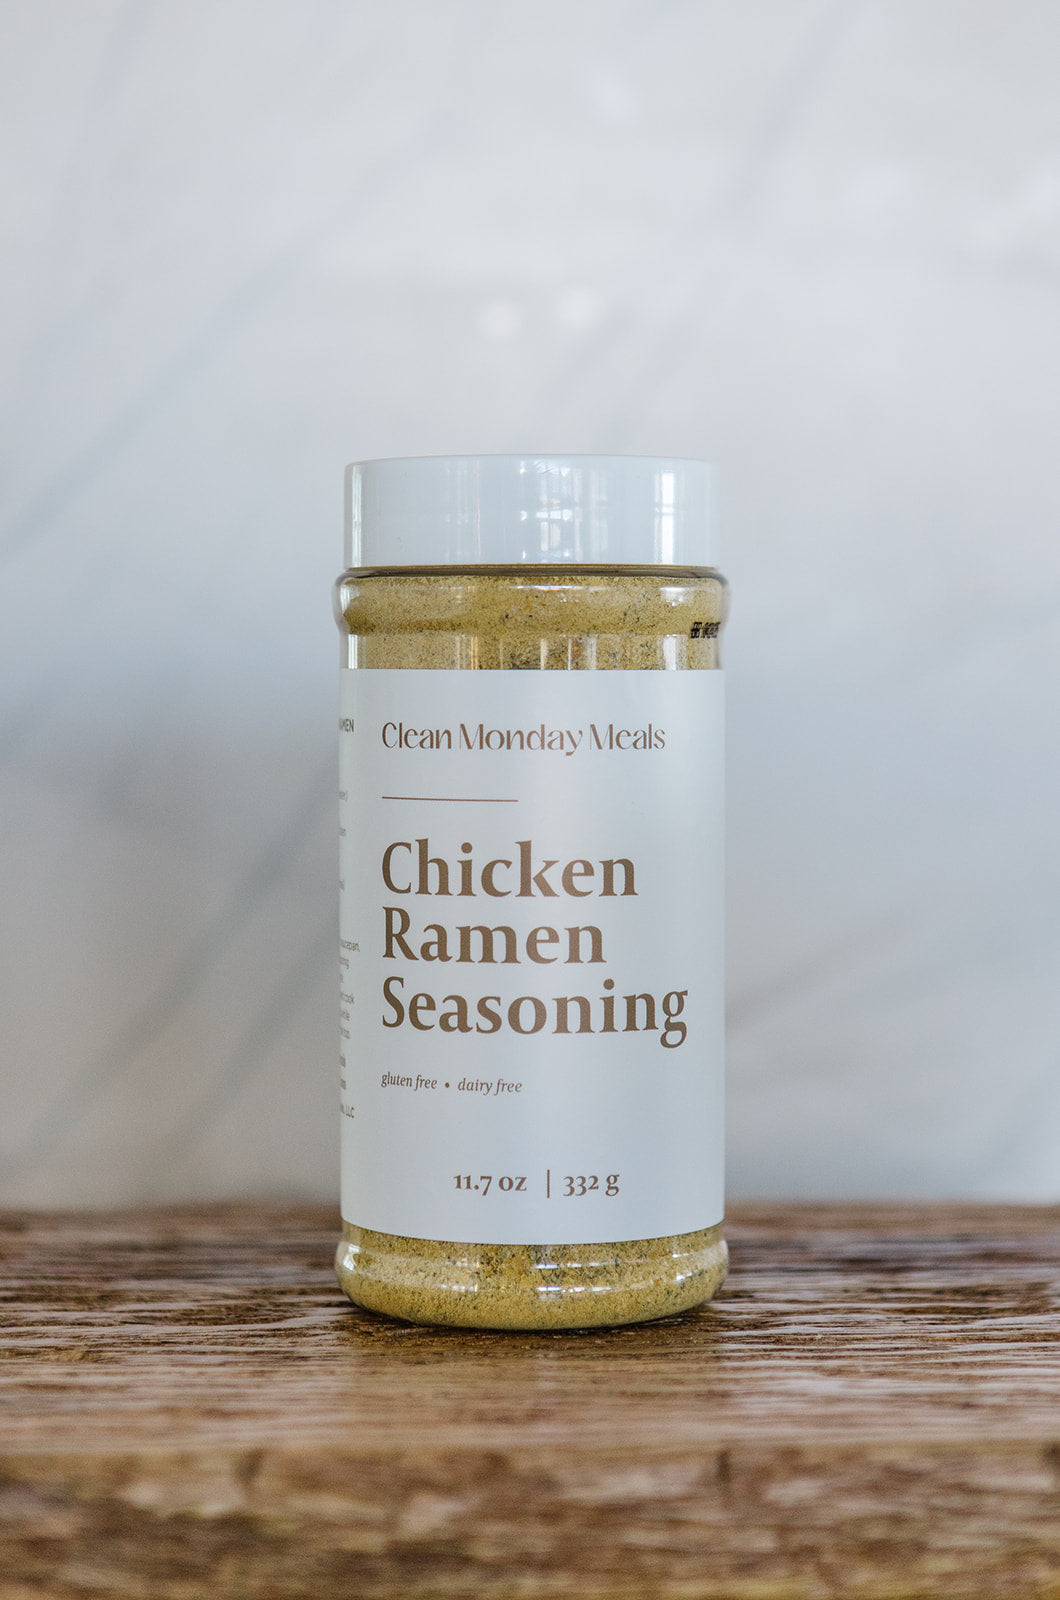 SAMABILA Chicken Ramen Seasoning Mix - Gluten Free - Vegan - Mild - Premium